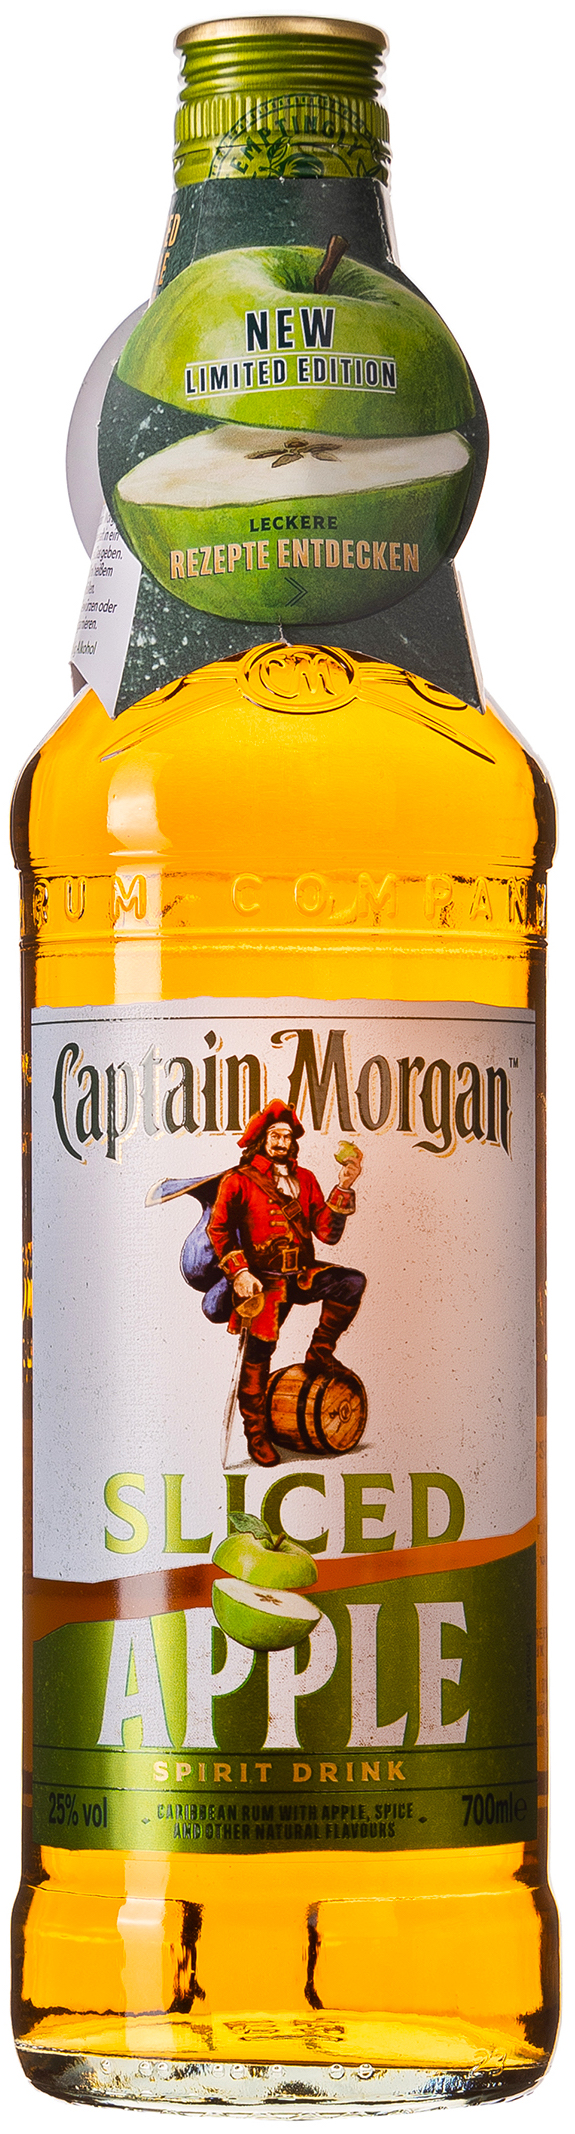 Captain Morgan Sliced Apple 25% vol. 0,7L